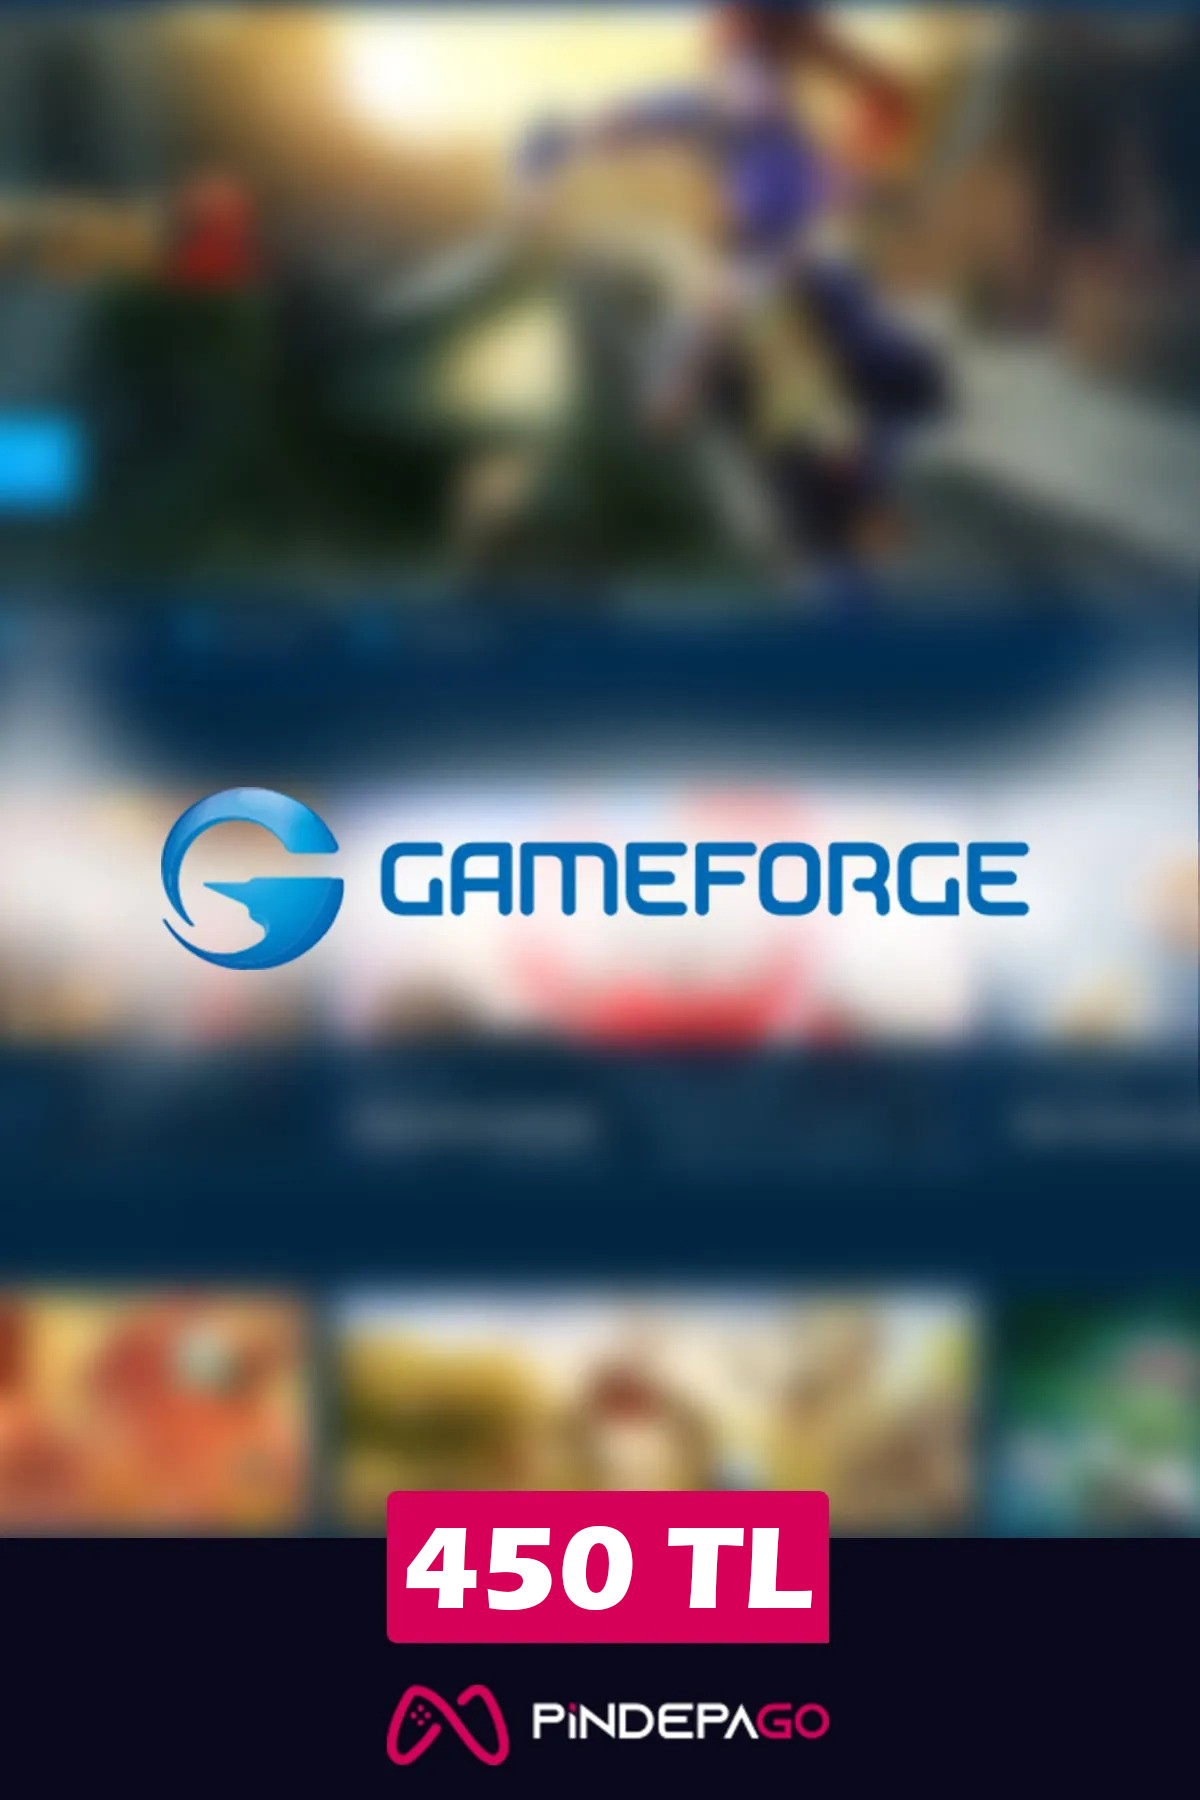 Gameforge 450 TL